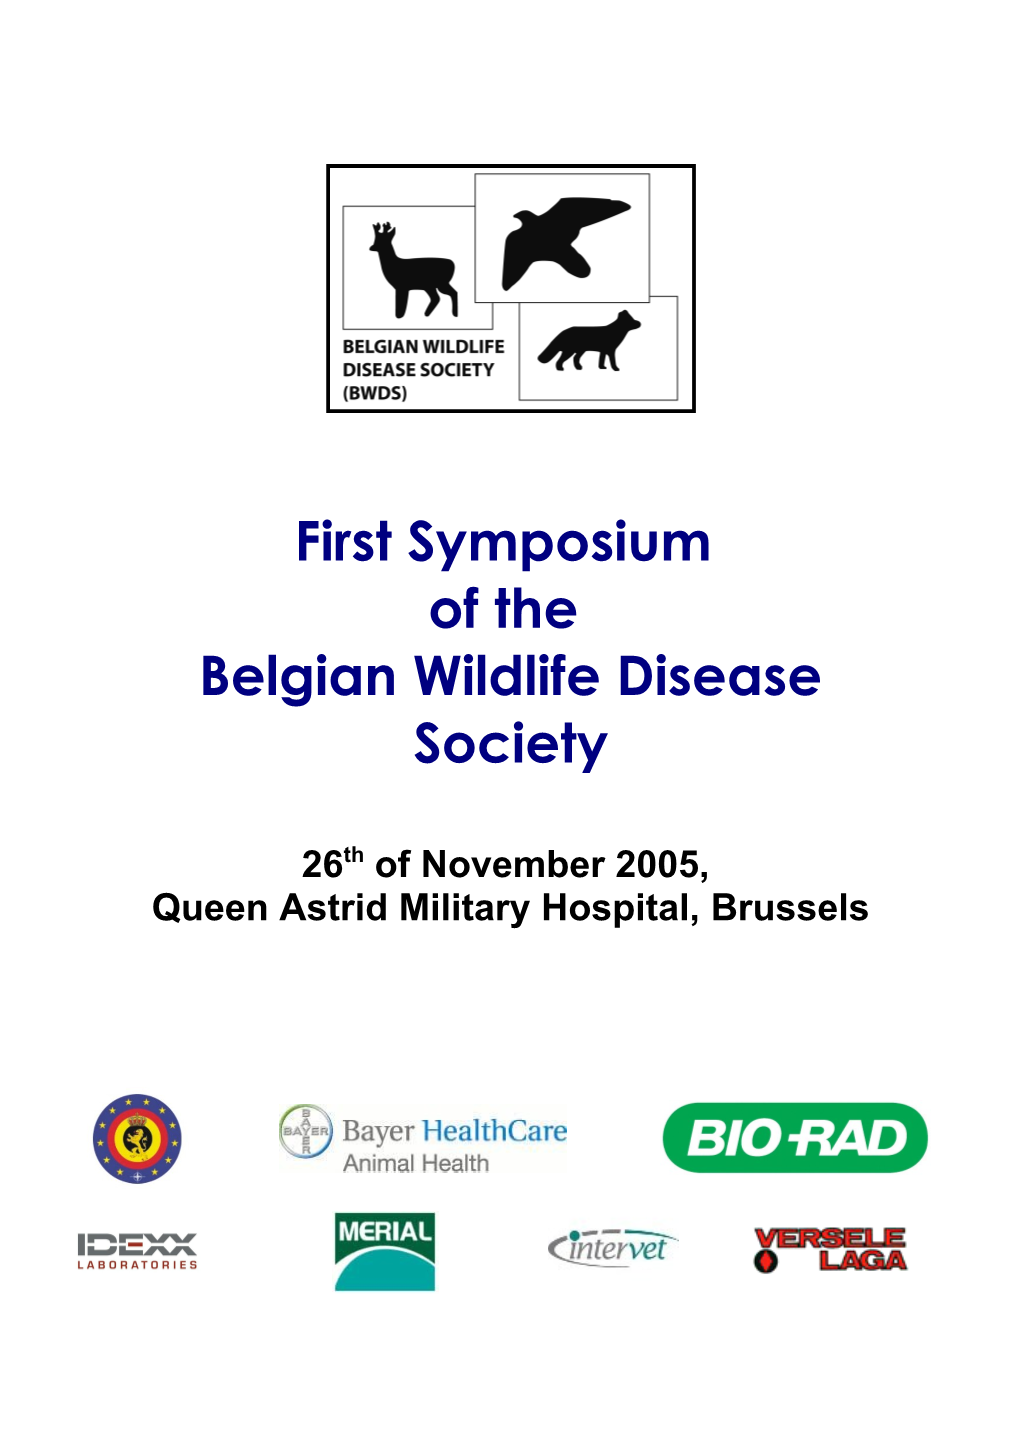 First Symposium of the Belgian Wildlife Disease Society